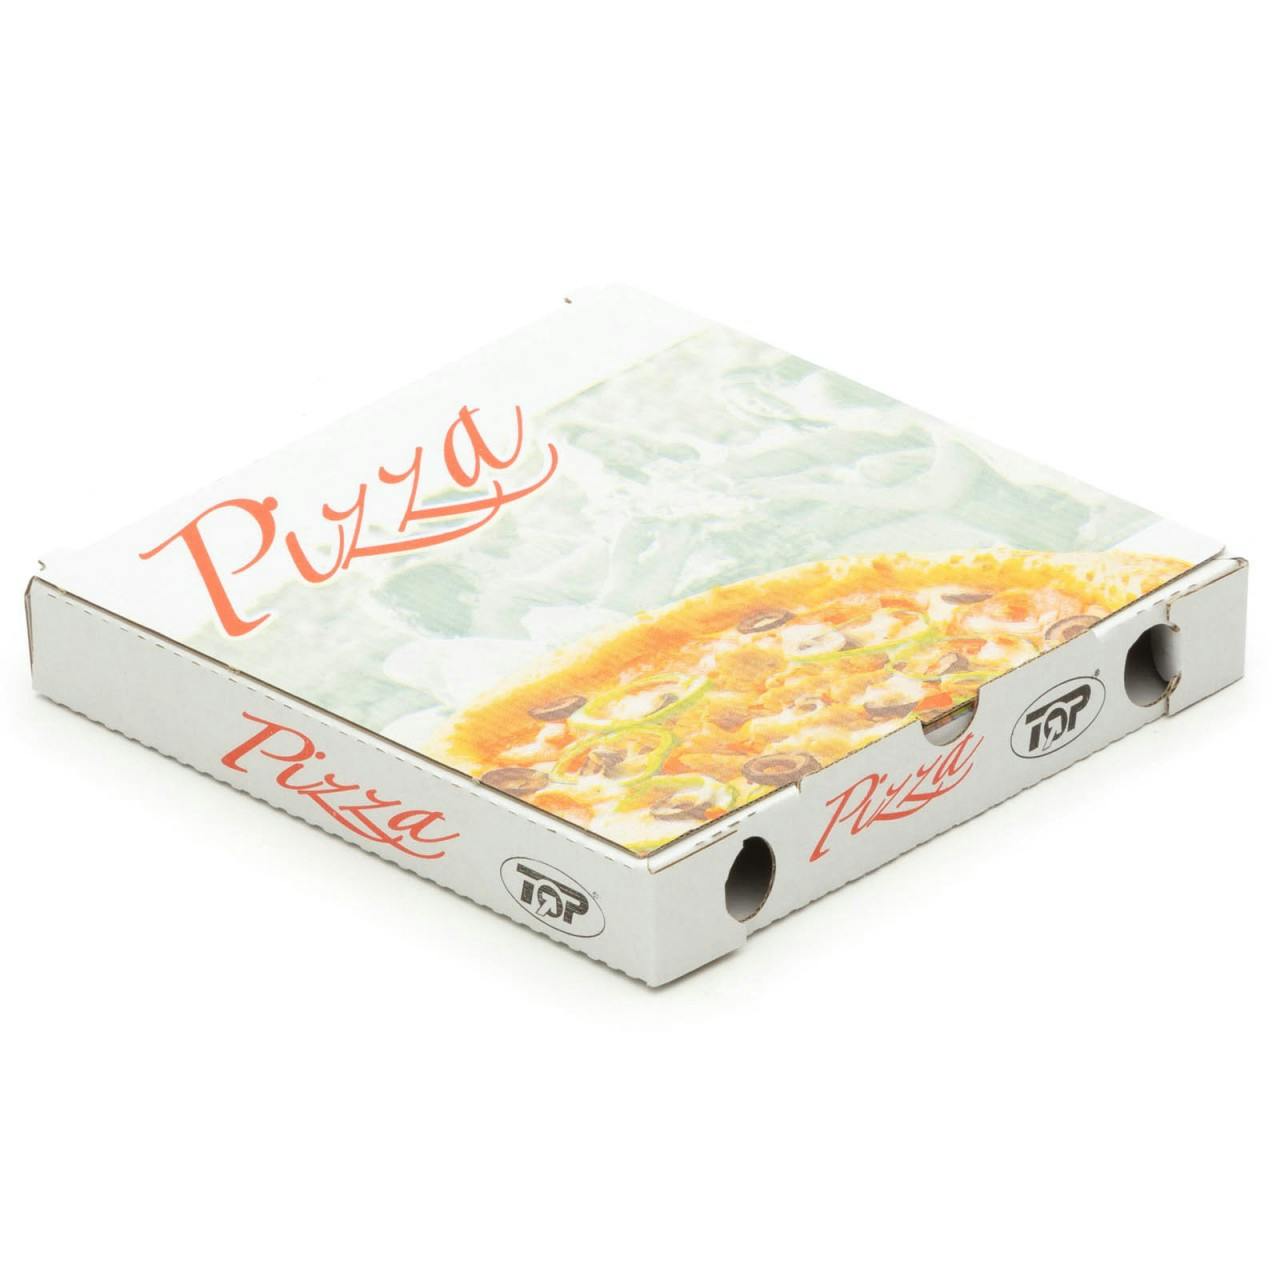 Pizzakarton aus Mikrowellpappe mit neutralem Motiv 60 x 40 x 5 cm 